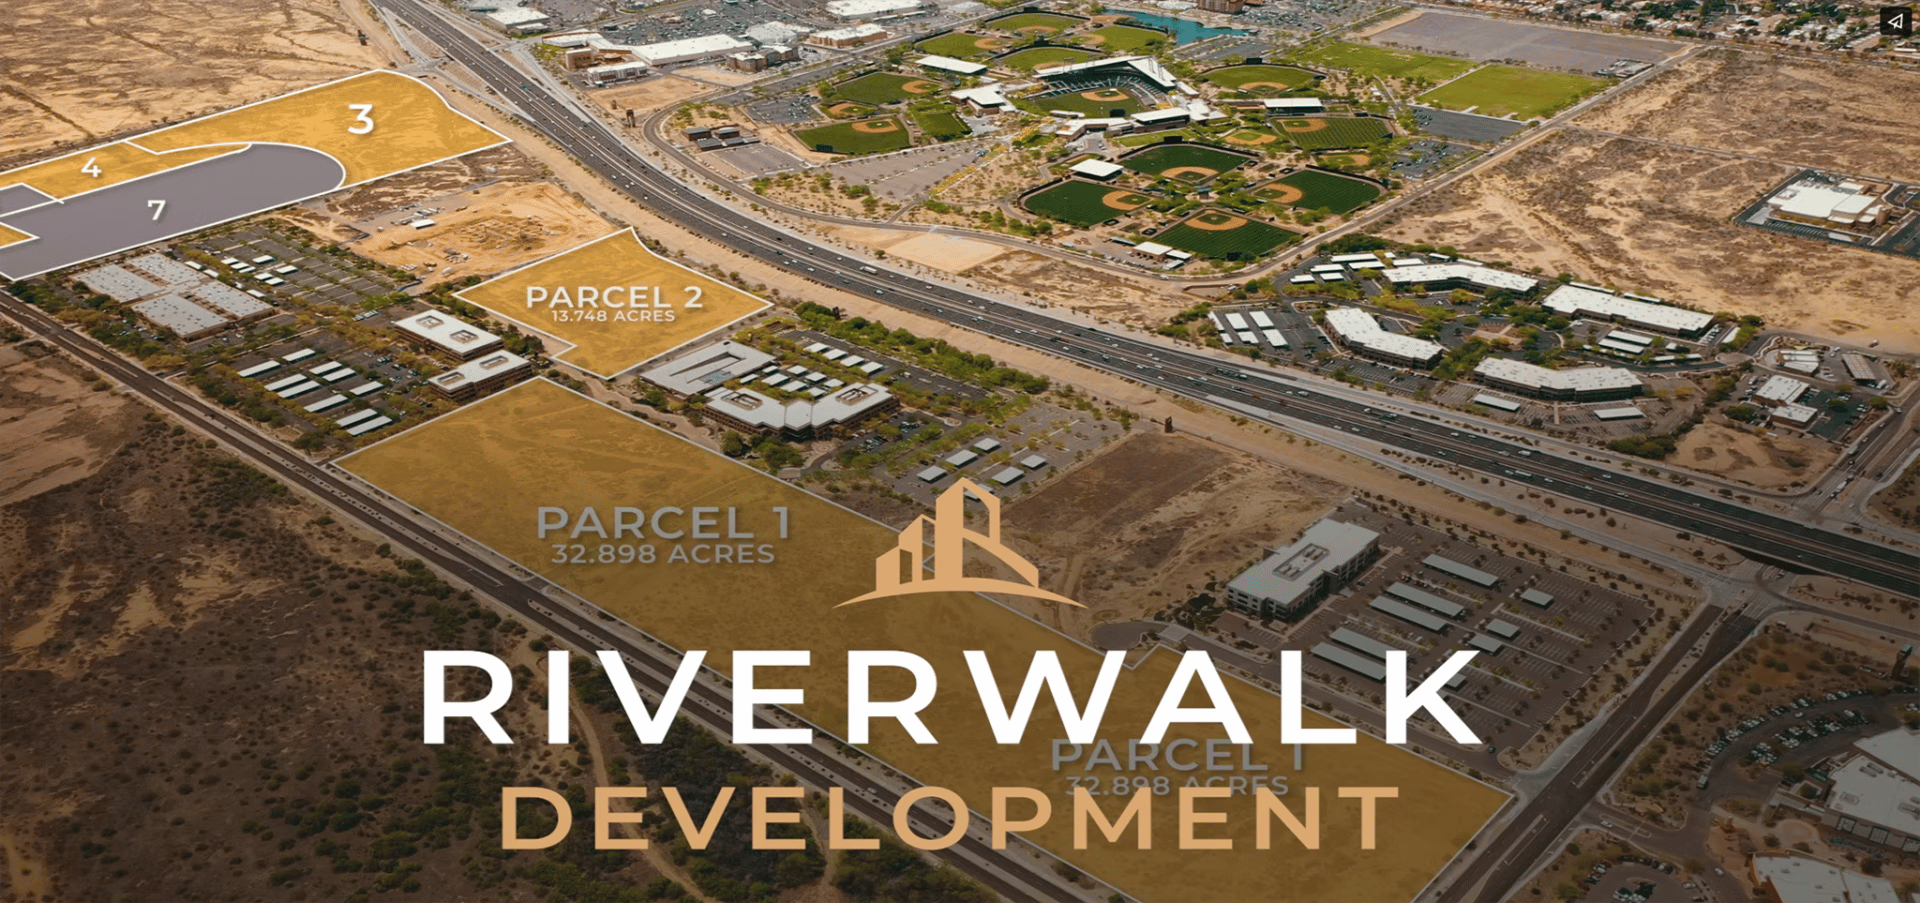 arial shot of Riverwalk Development, just off the HWY 101 in Scottsdale, AZ